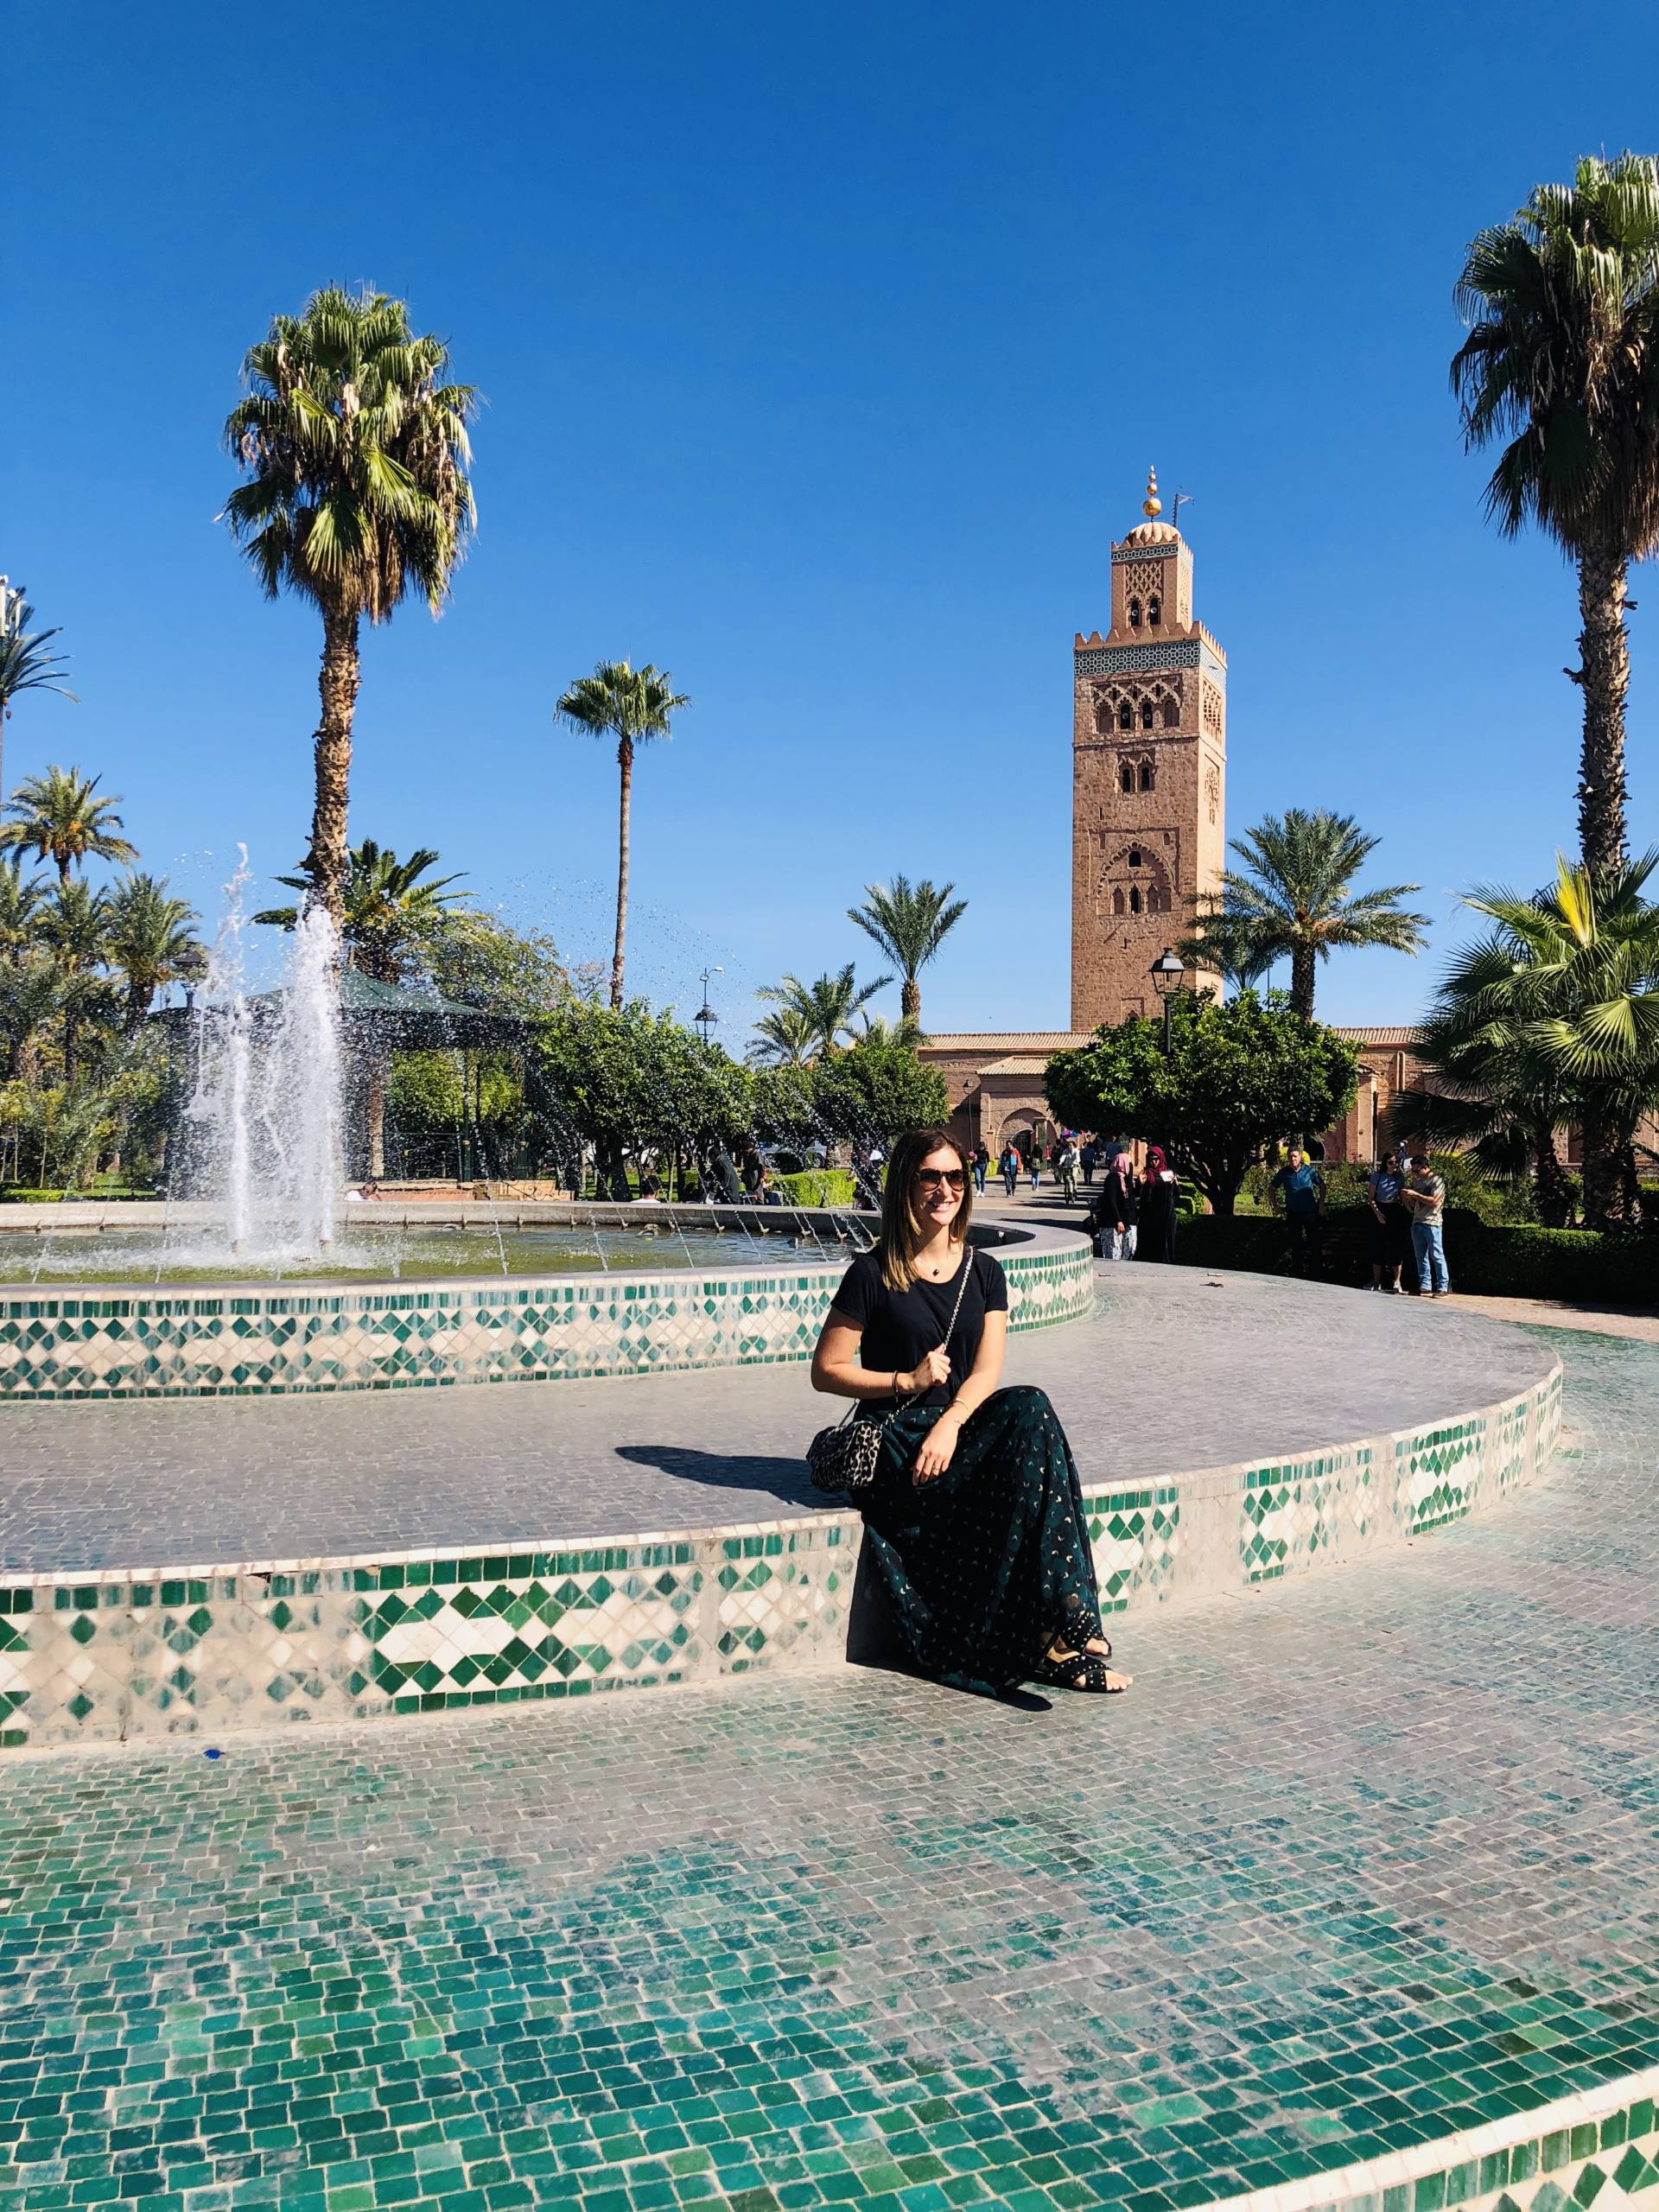 Koutoubia marrakech